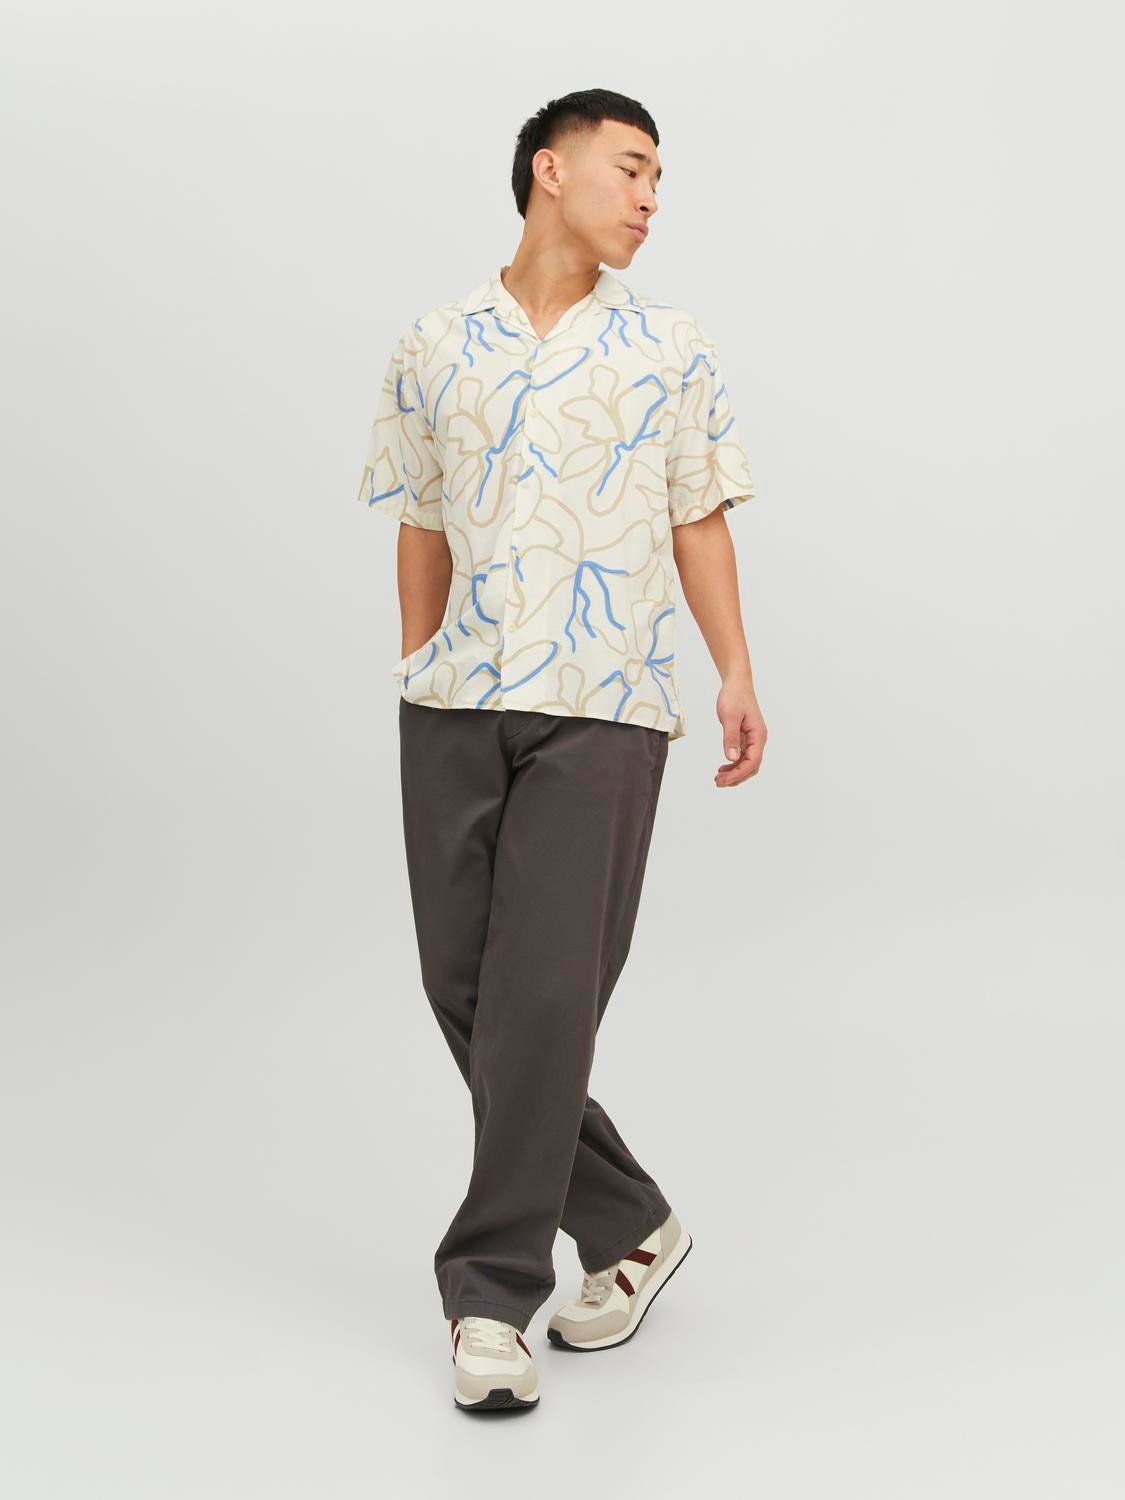 Jack & Jones Regular Fit Casual shirt -Marina - 12202240